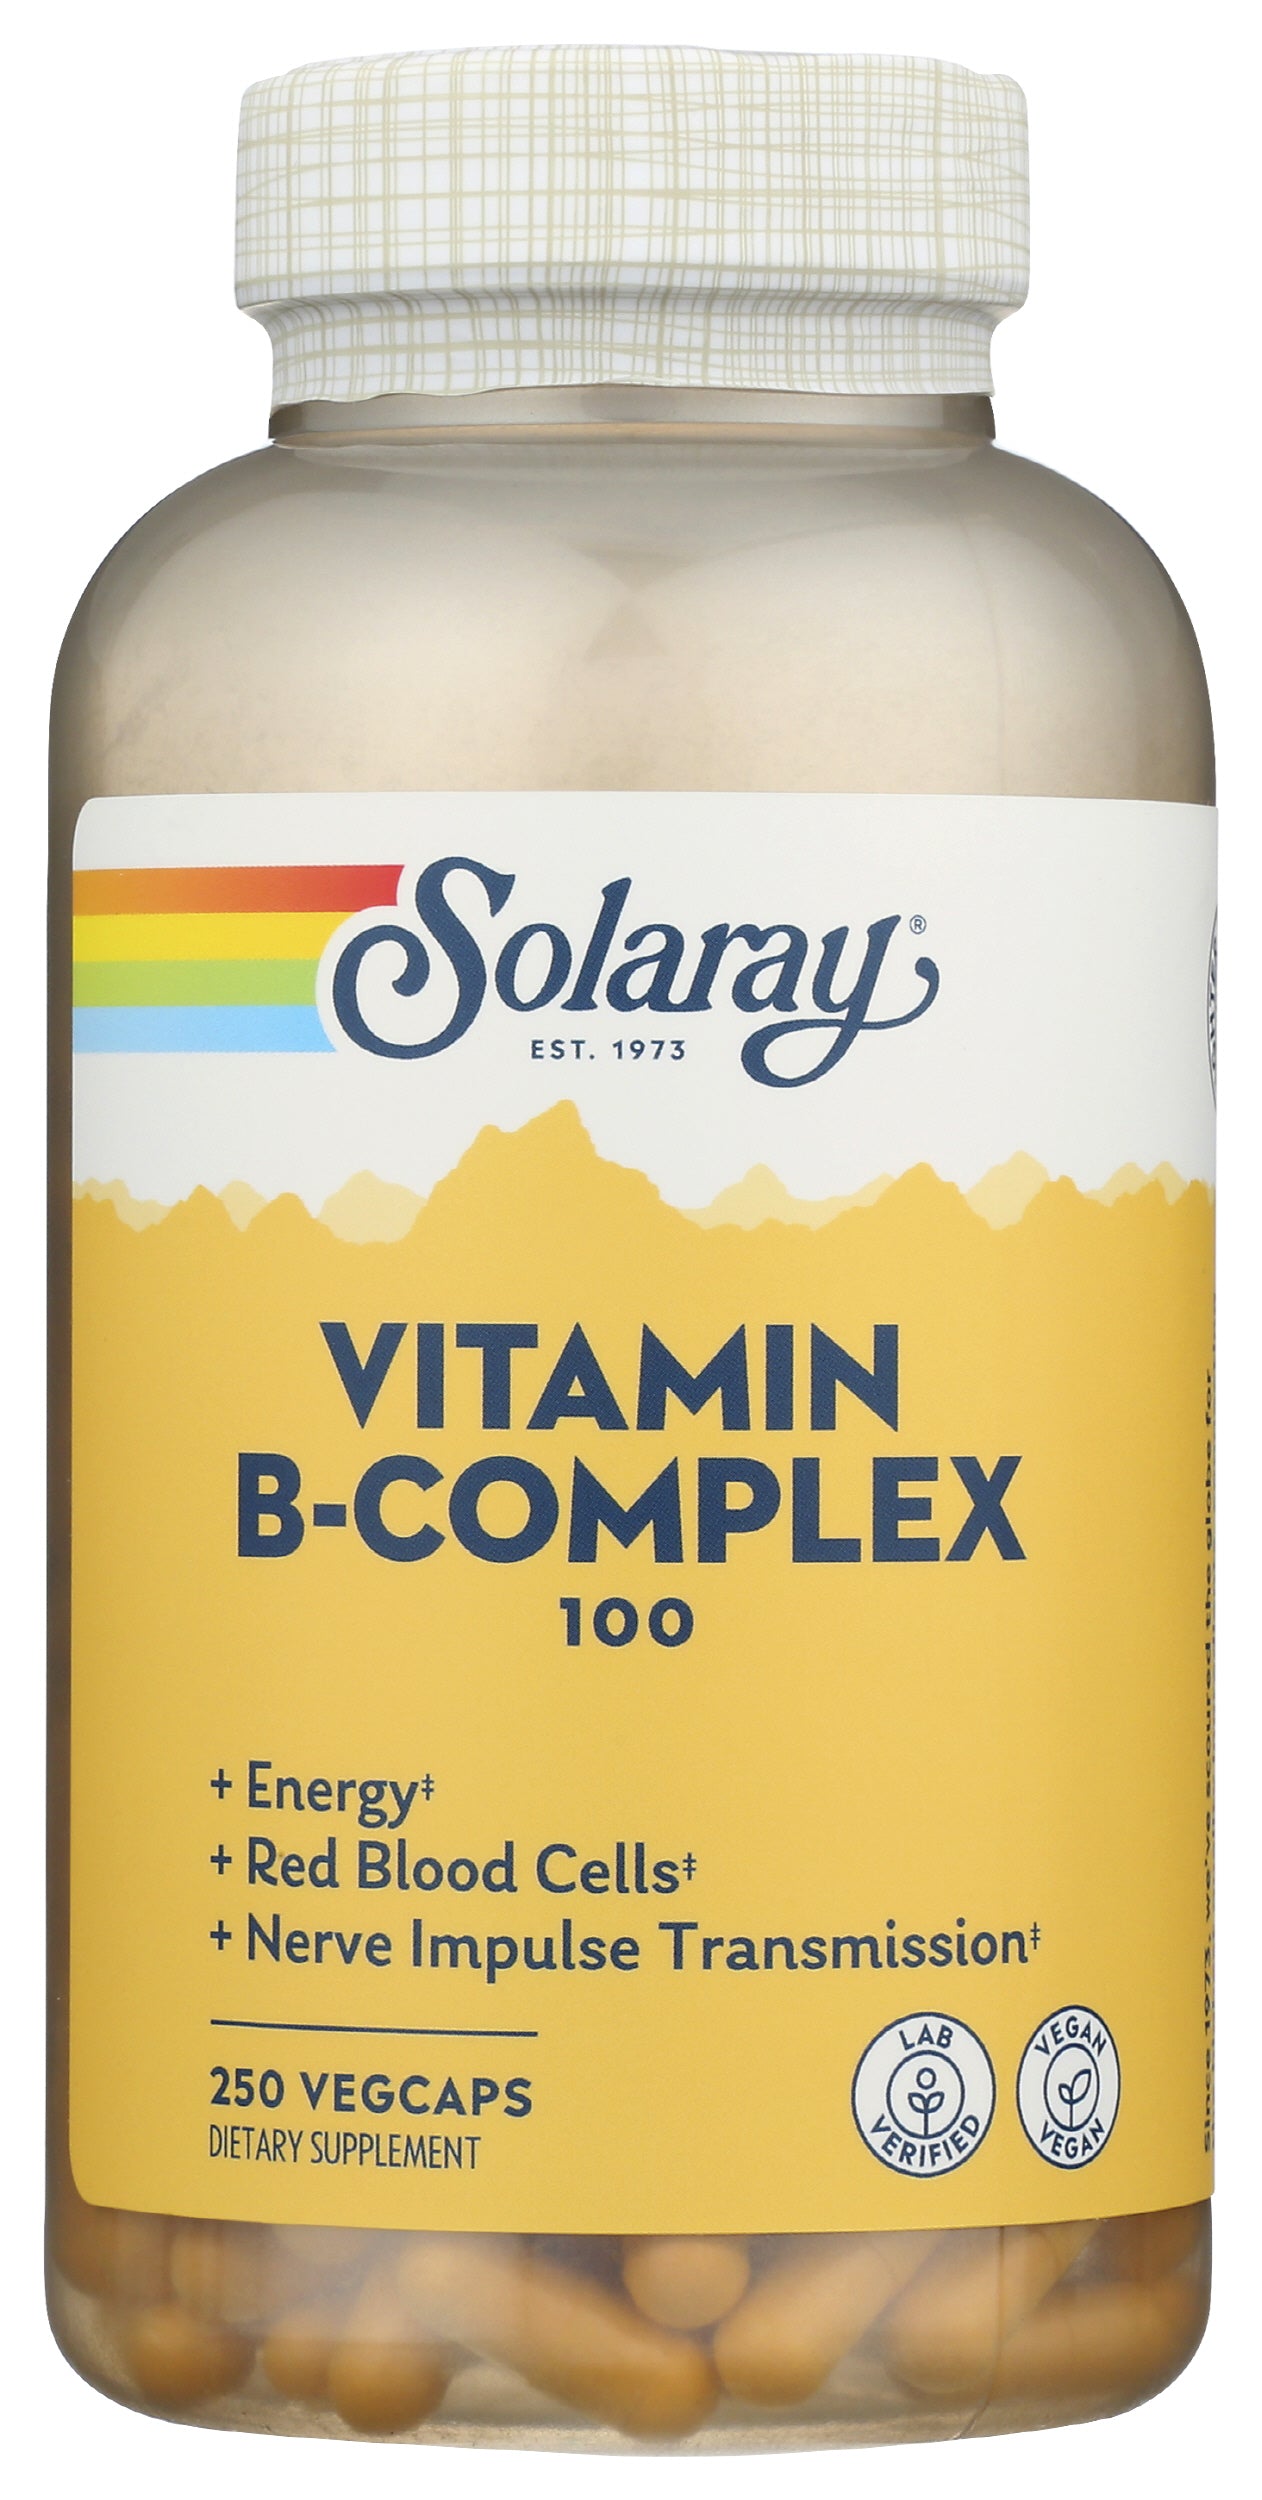 Solaray Vitamin B-Complex 100 250 Vegcaps Front of Bottle